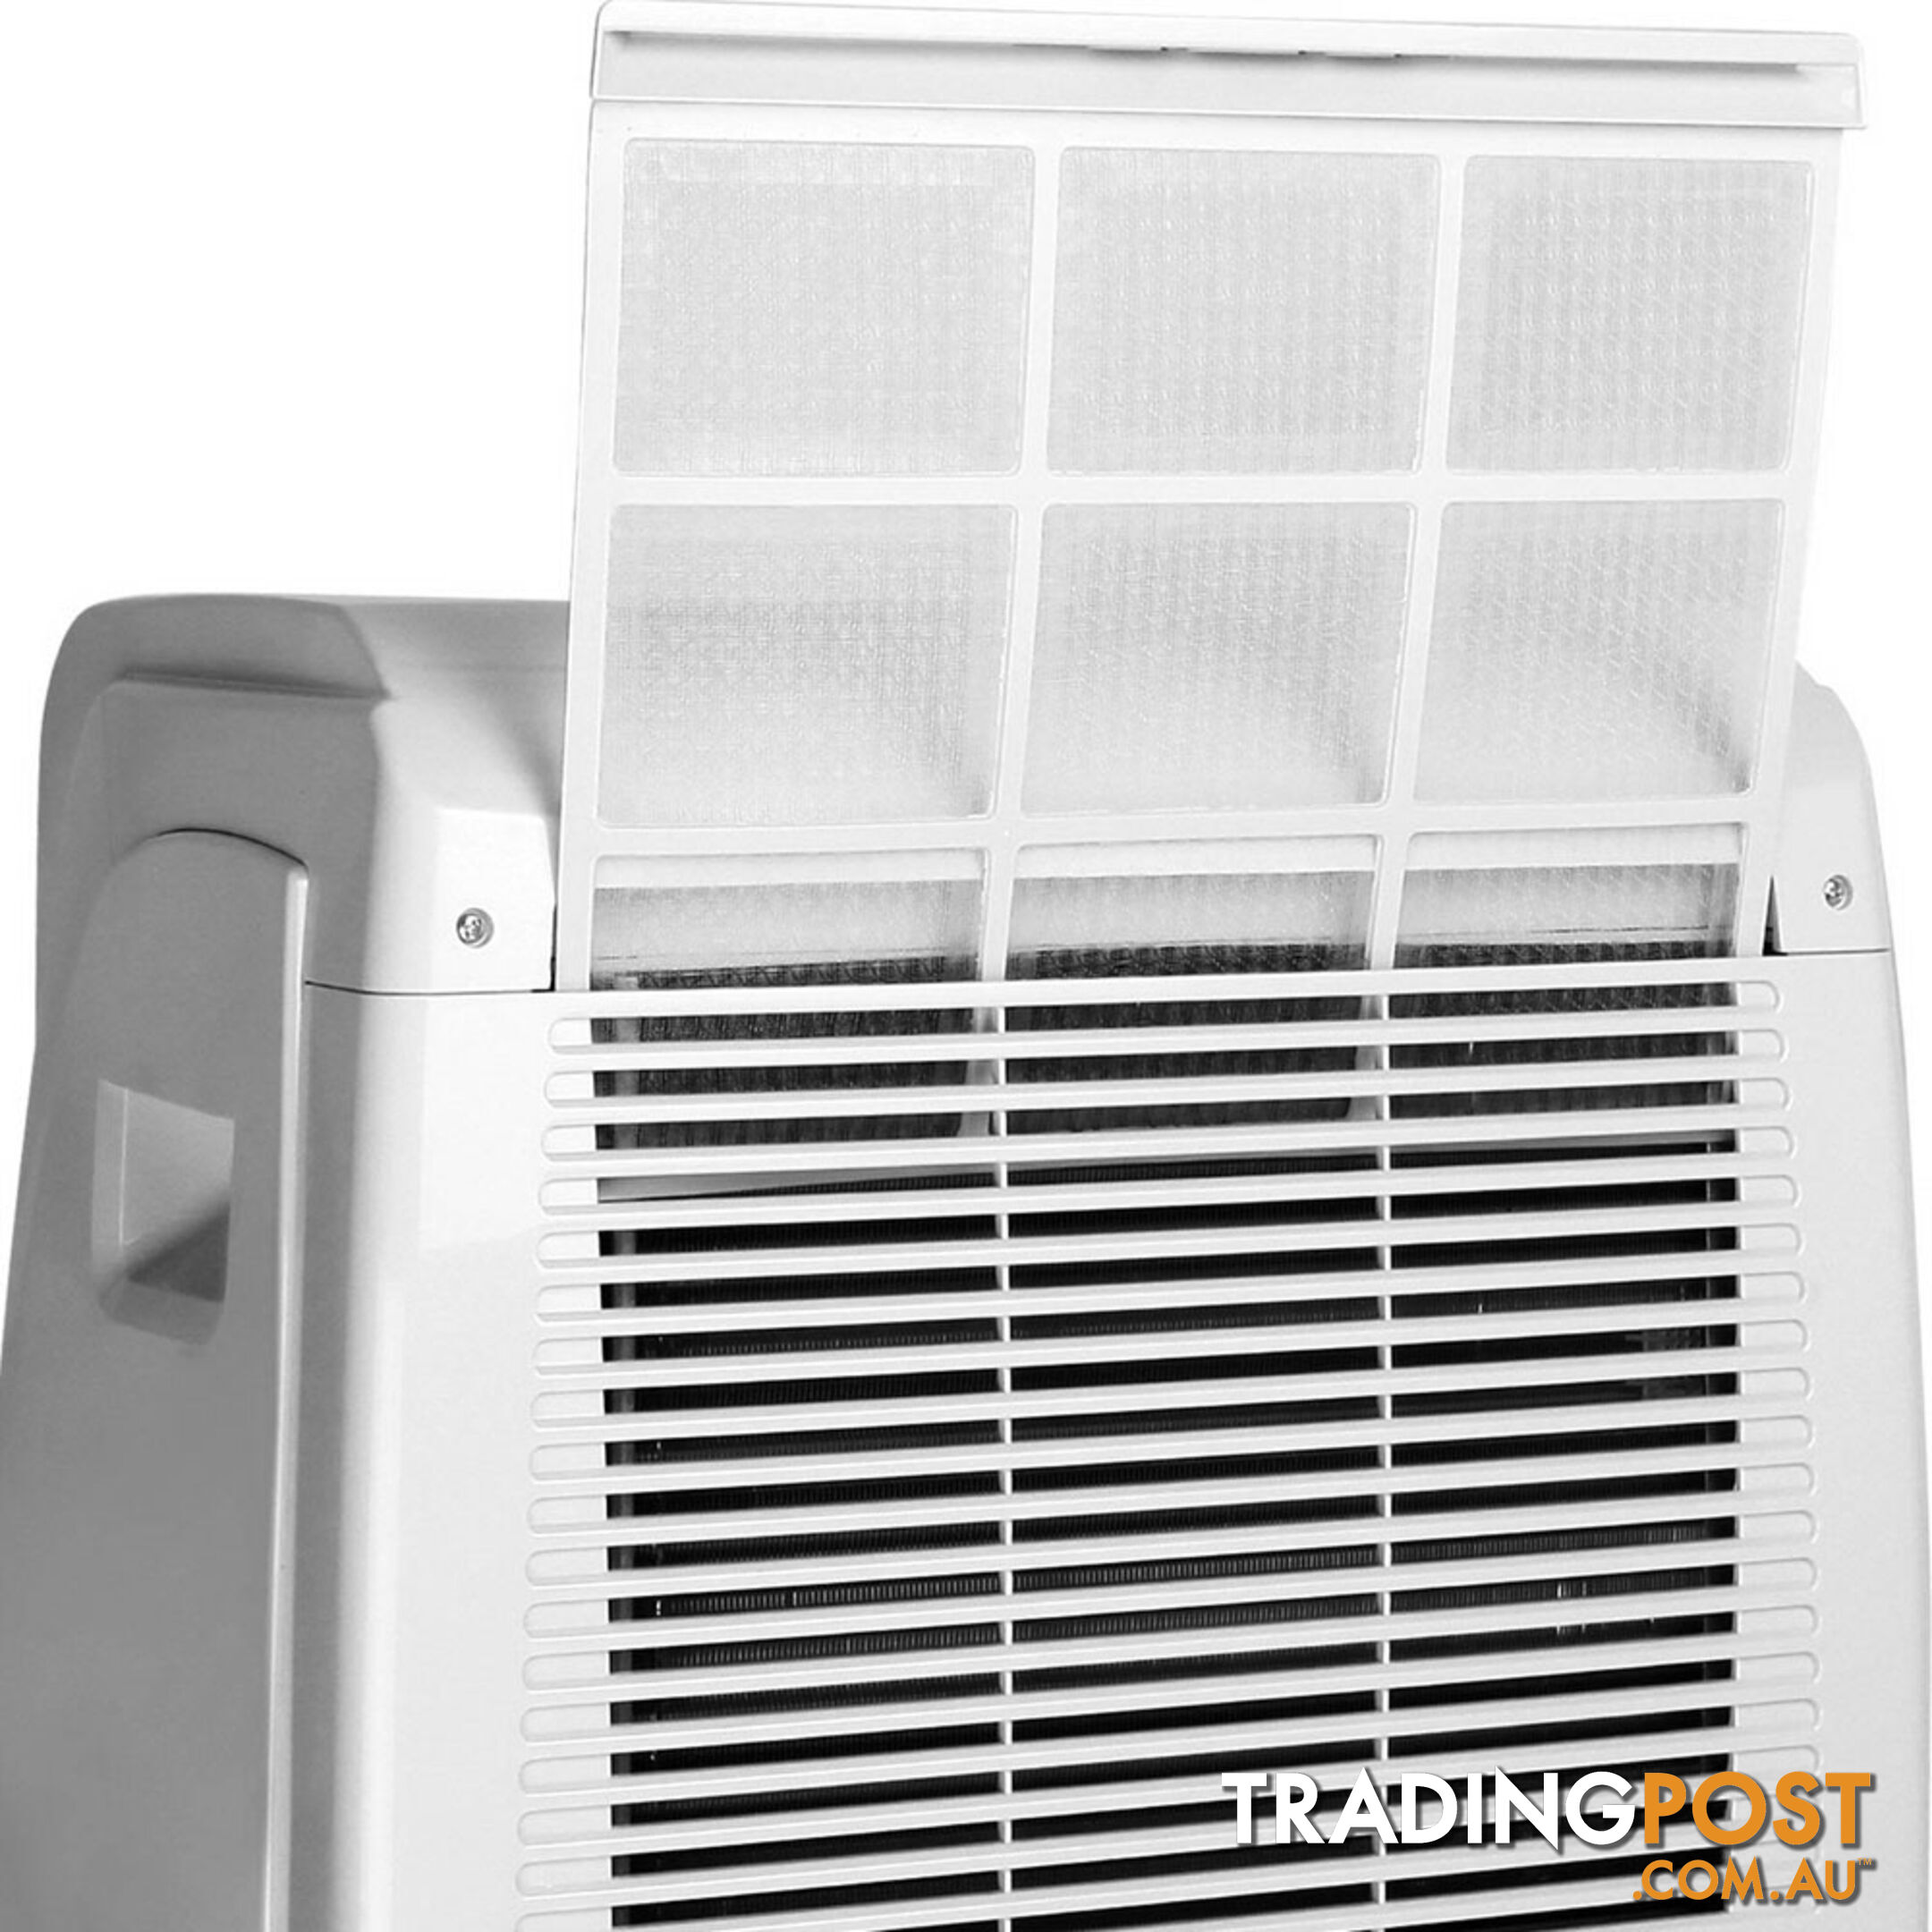 4 in 1 Portable Air Conditioner 71L - White